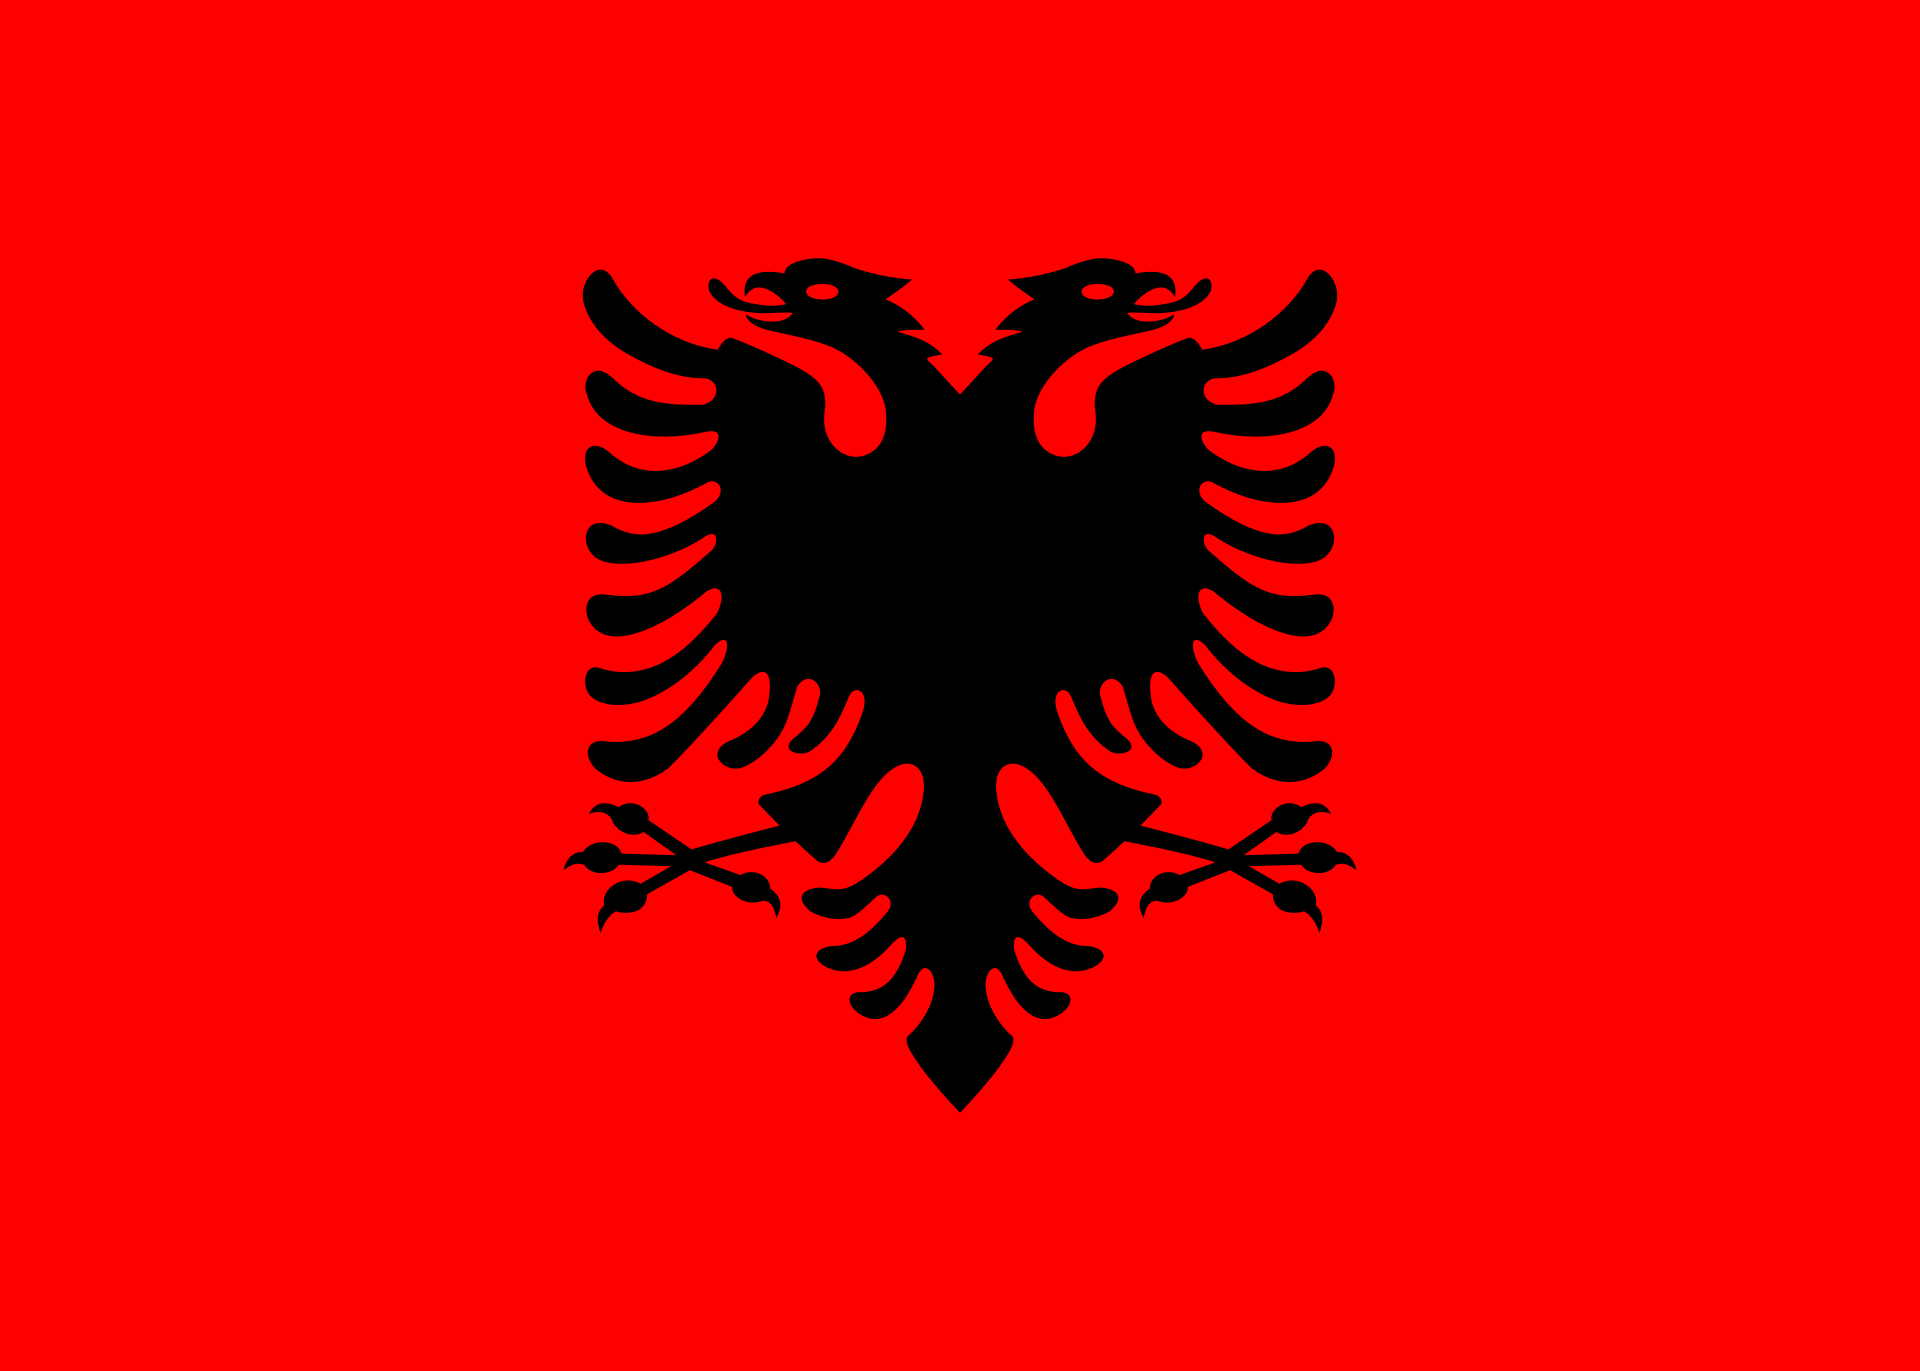 Albaniens flagga